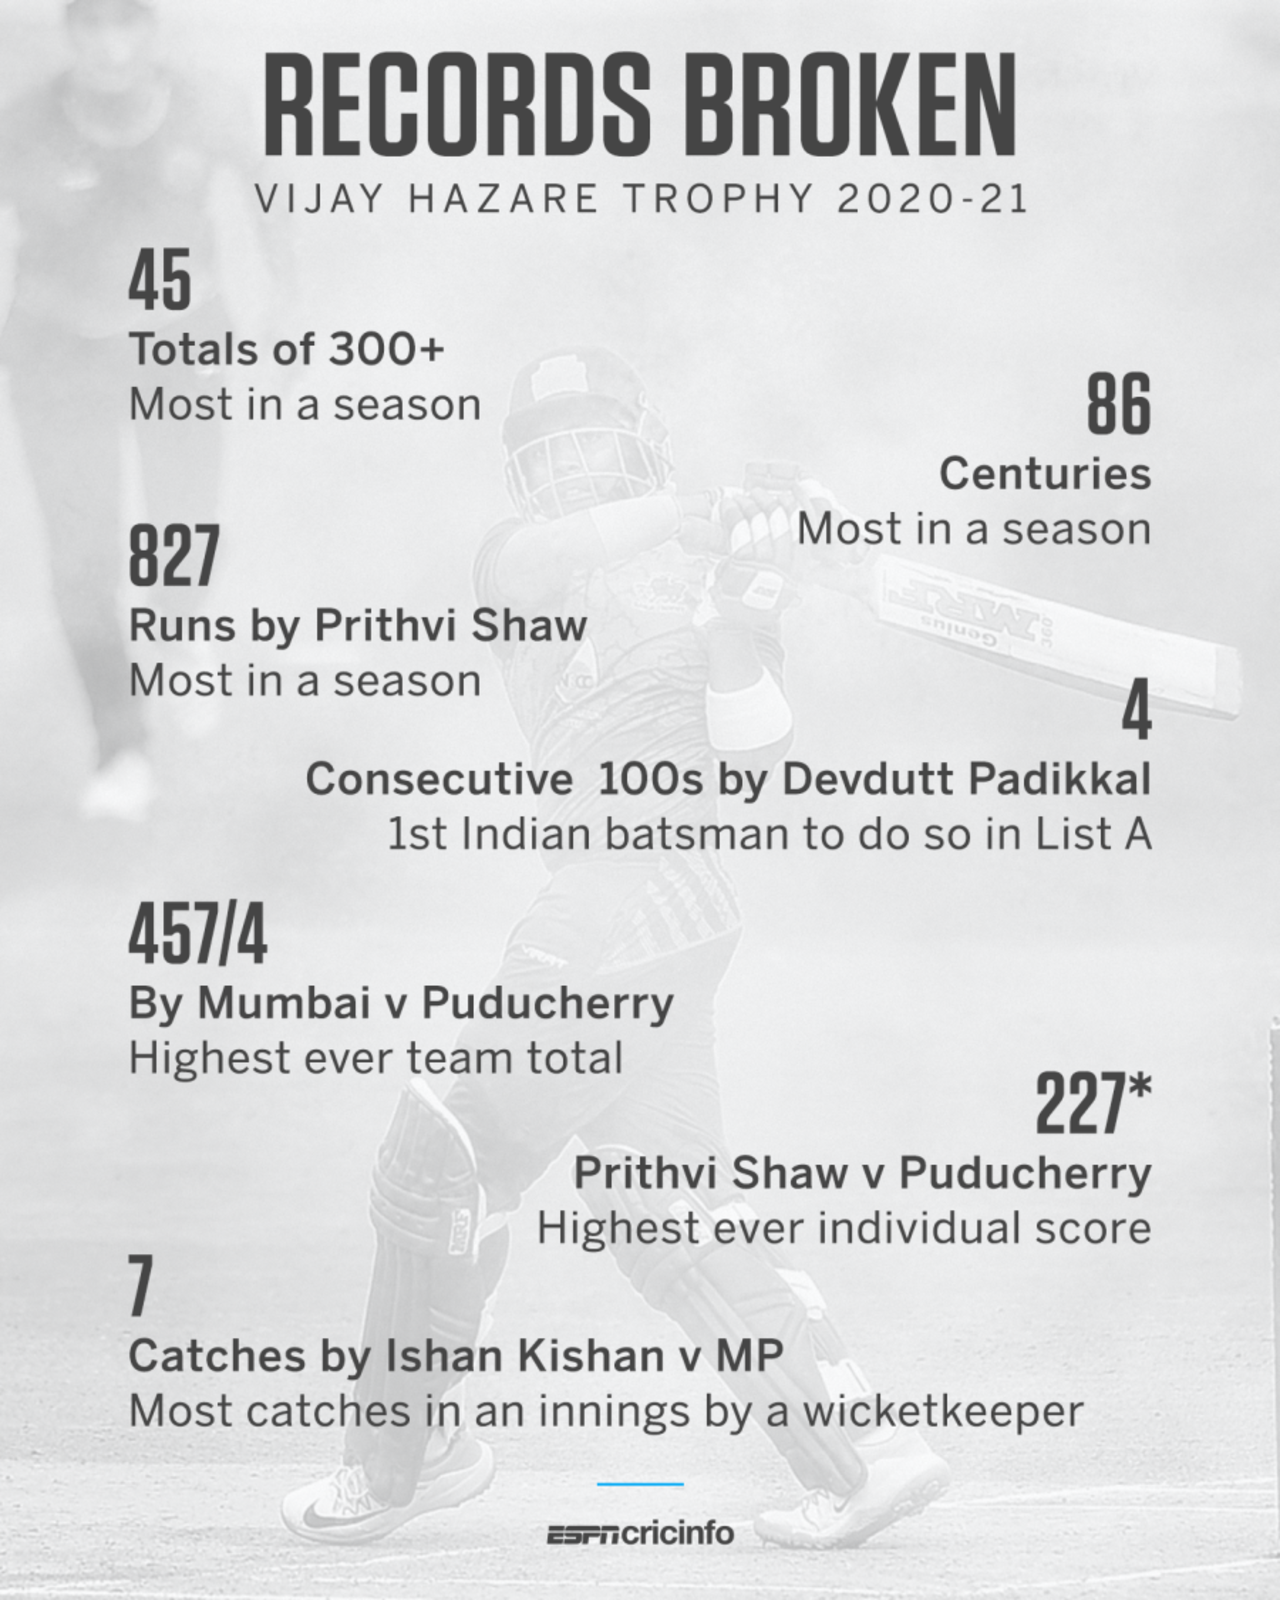 Plenty of batting records were broken during the 2020-21 Vijay Hazare Trophy